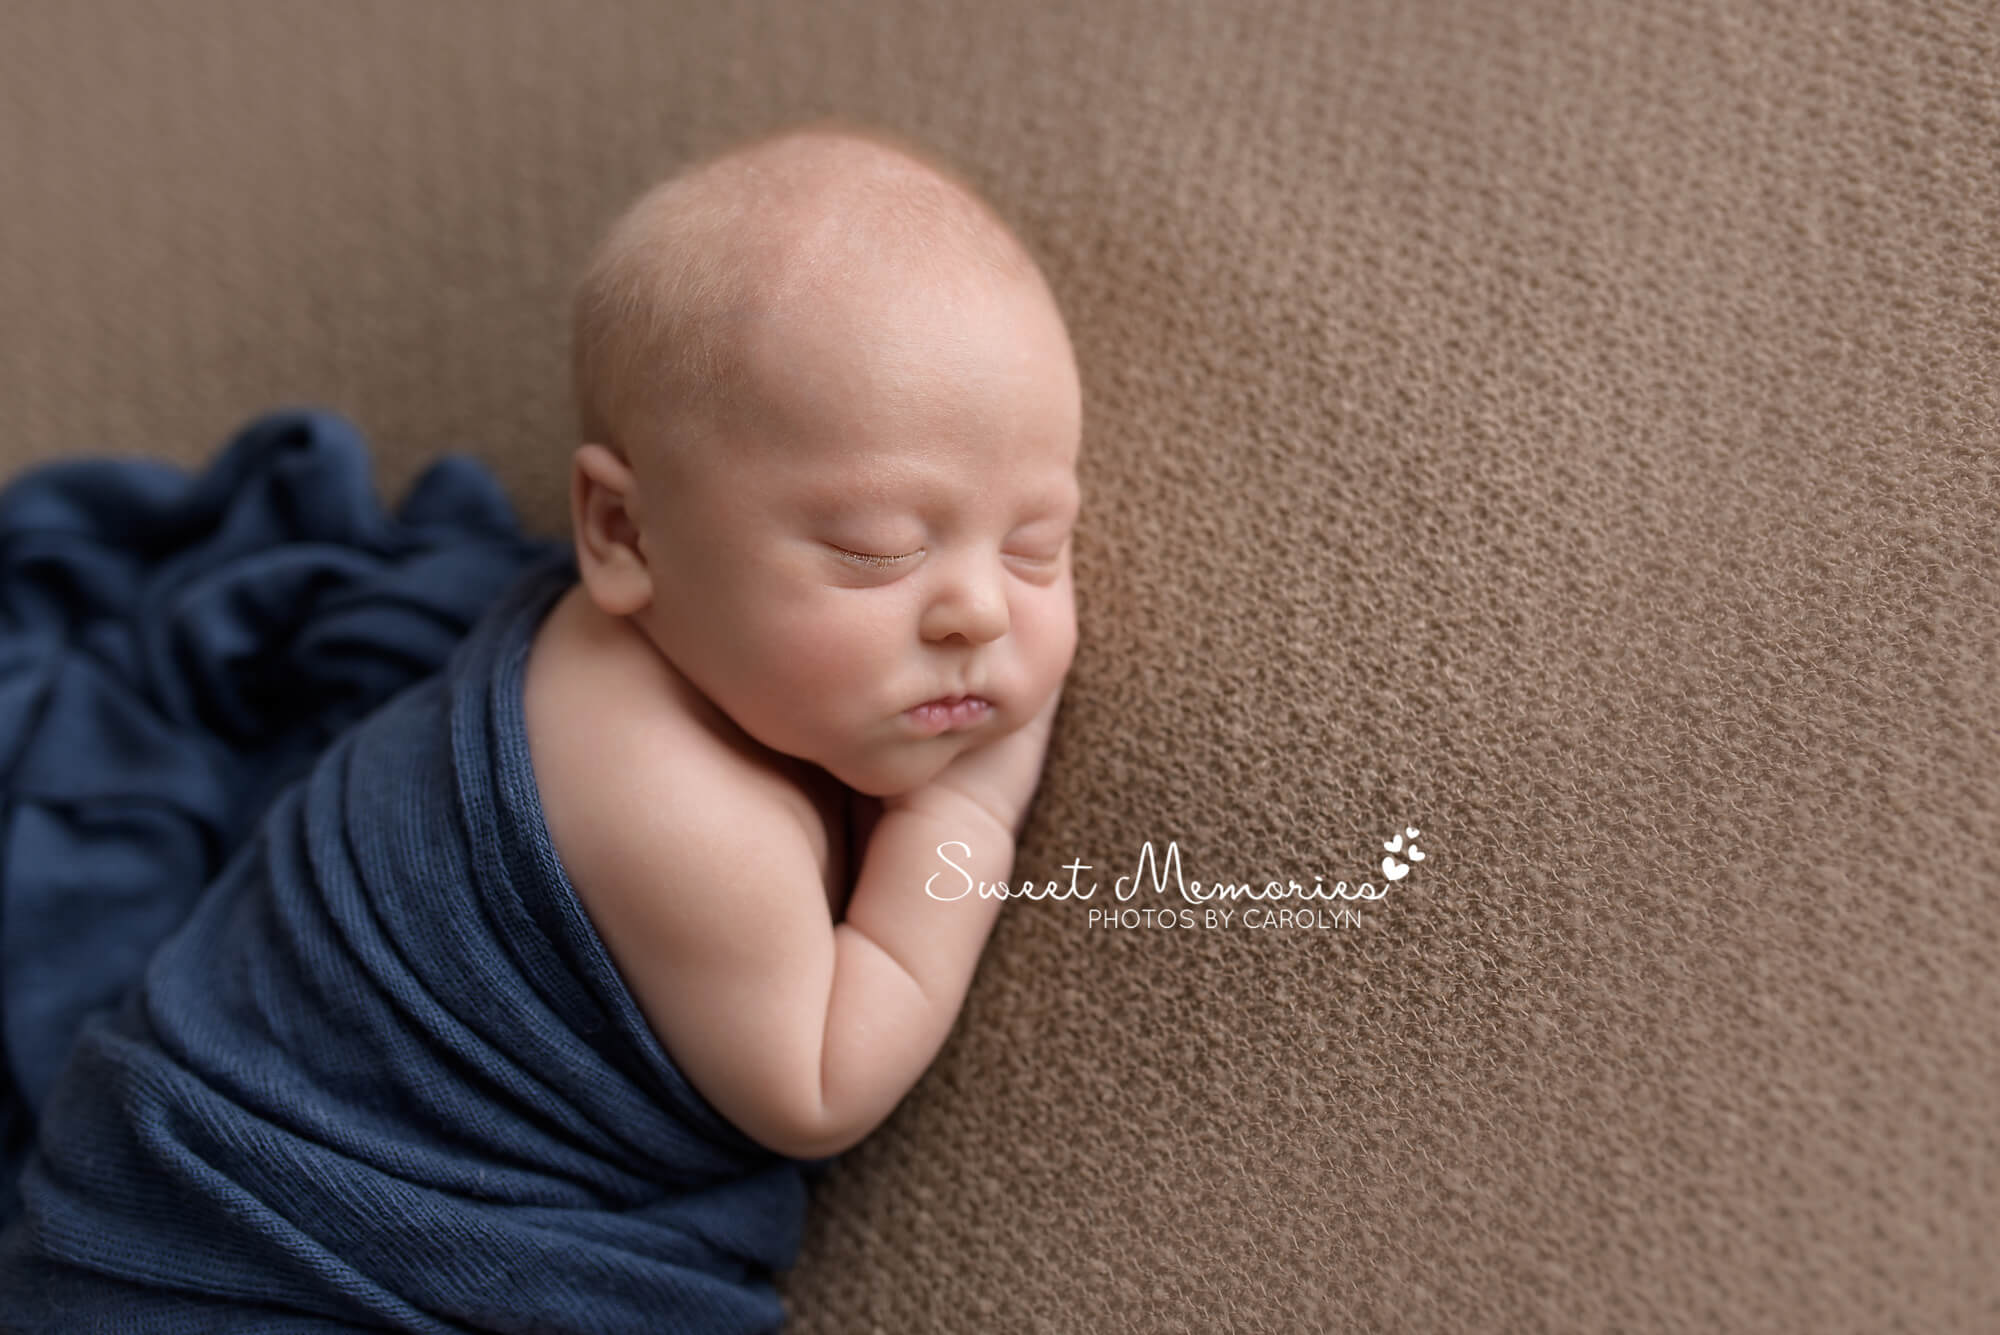 newborn baby boy on brown blanket wrapped in blue side profile | Warrington, PA newborn photographer | Sweet Memories Photos by Carolyn, Quakertown Pennsylvania